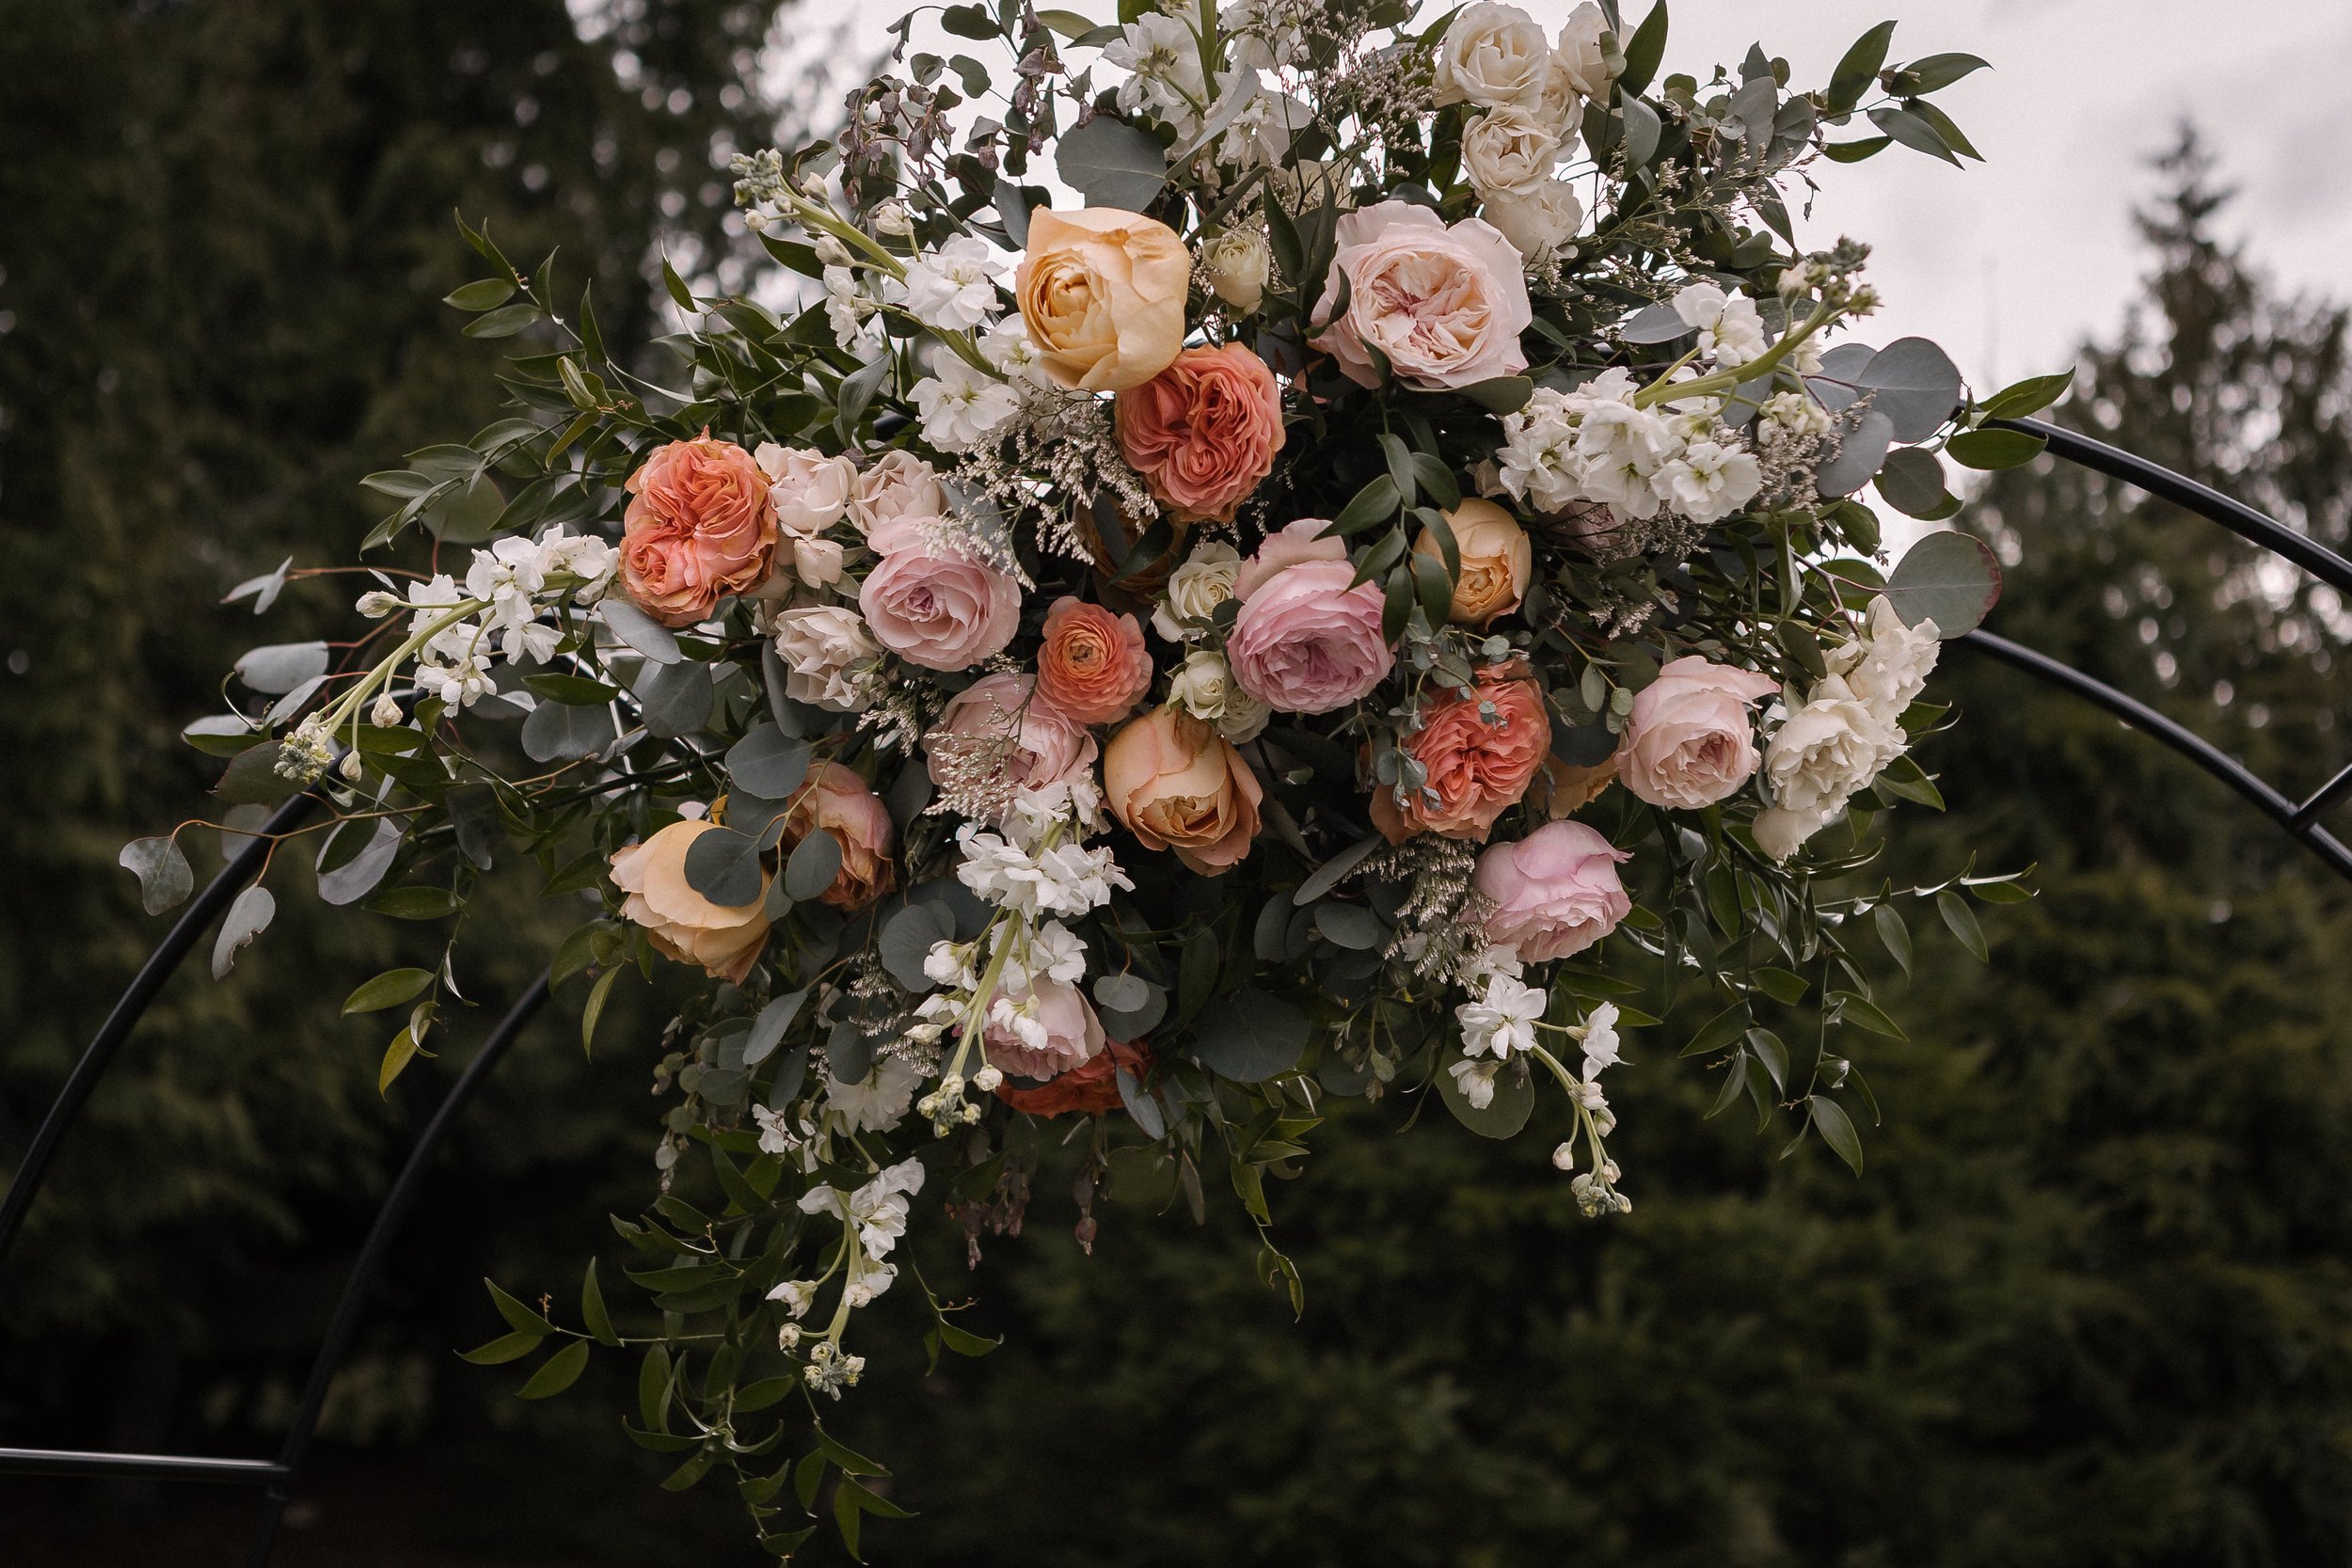 Wedding Altar Flowers